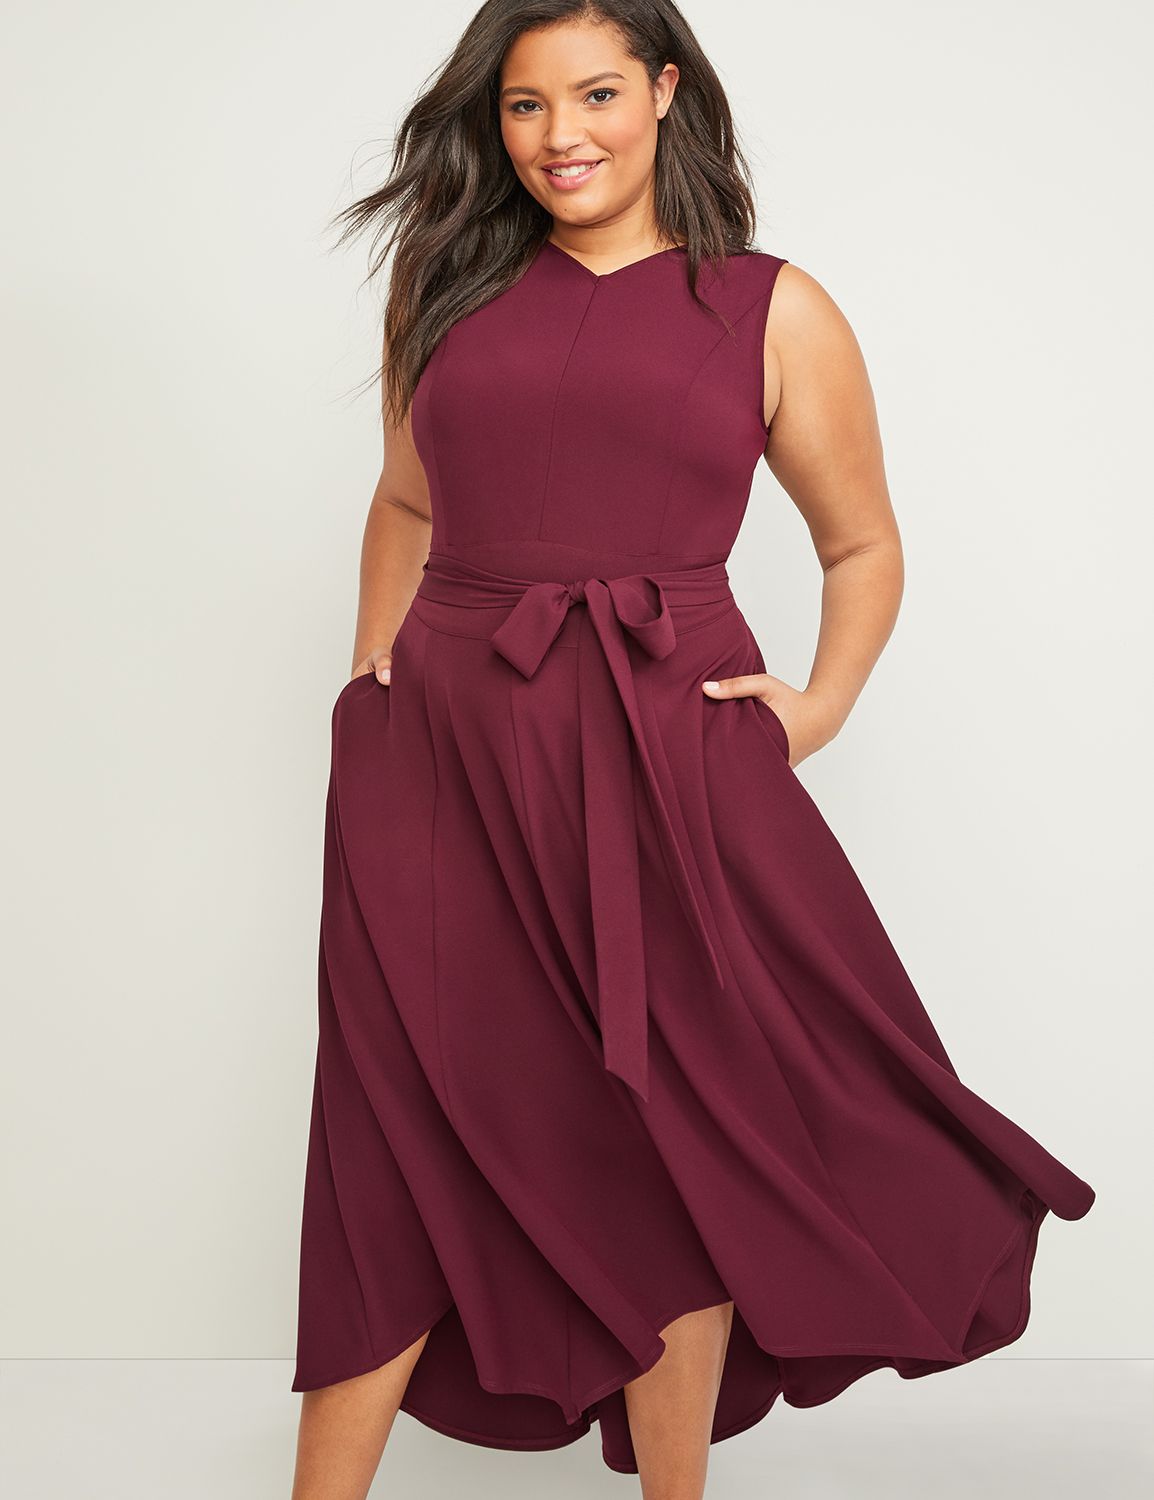 lane bryant burgundy dress